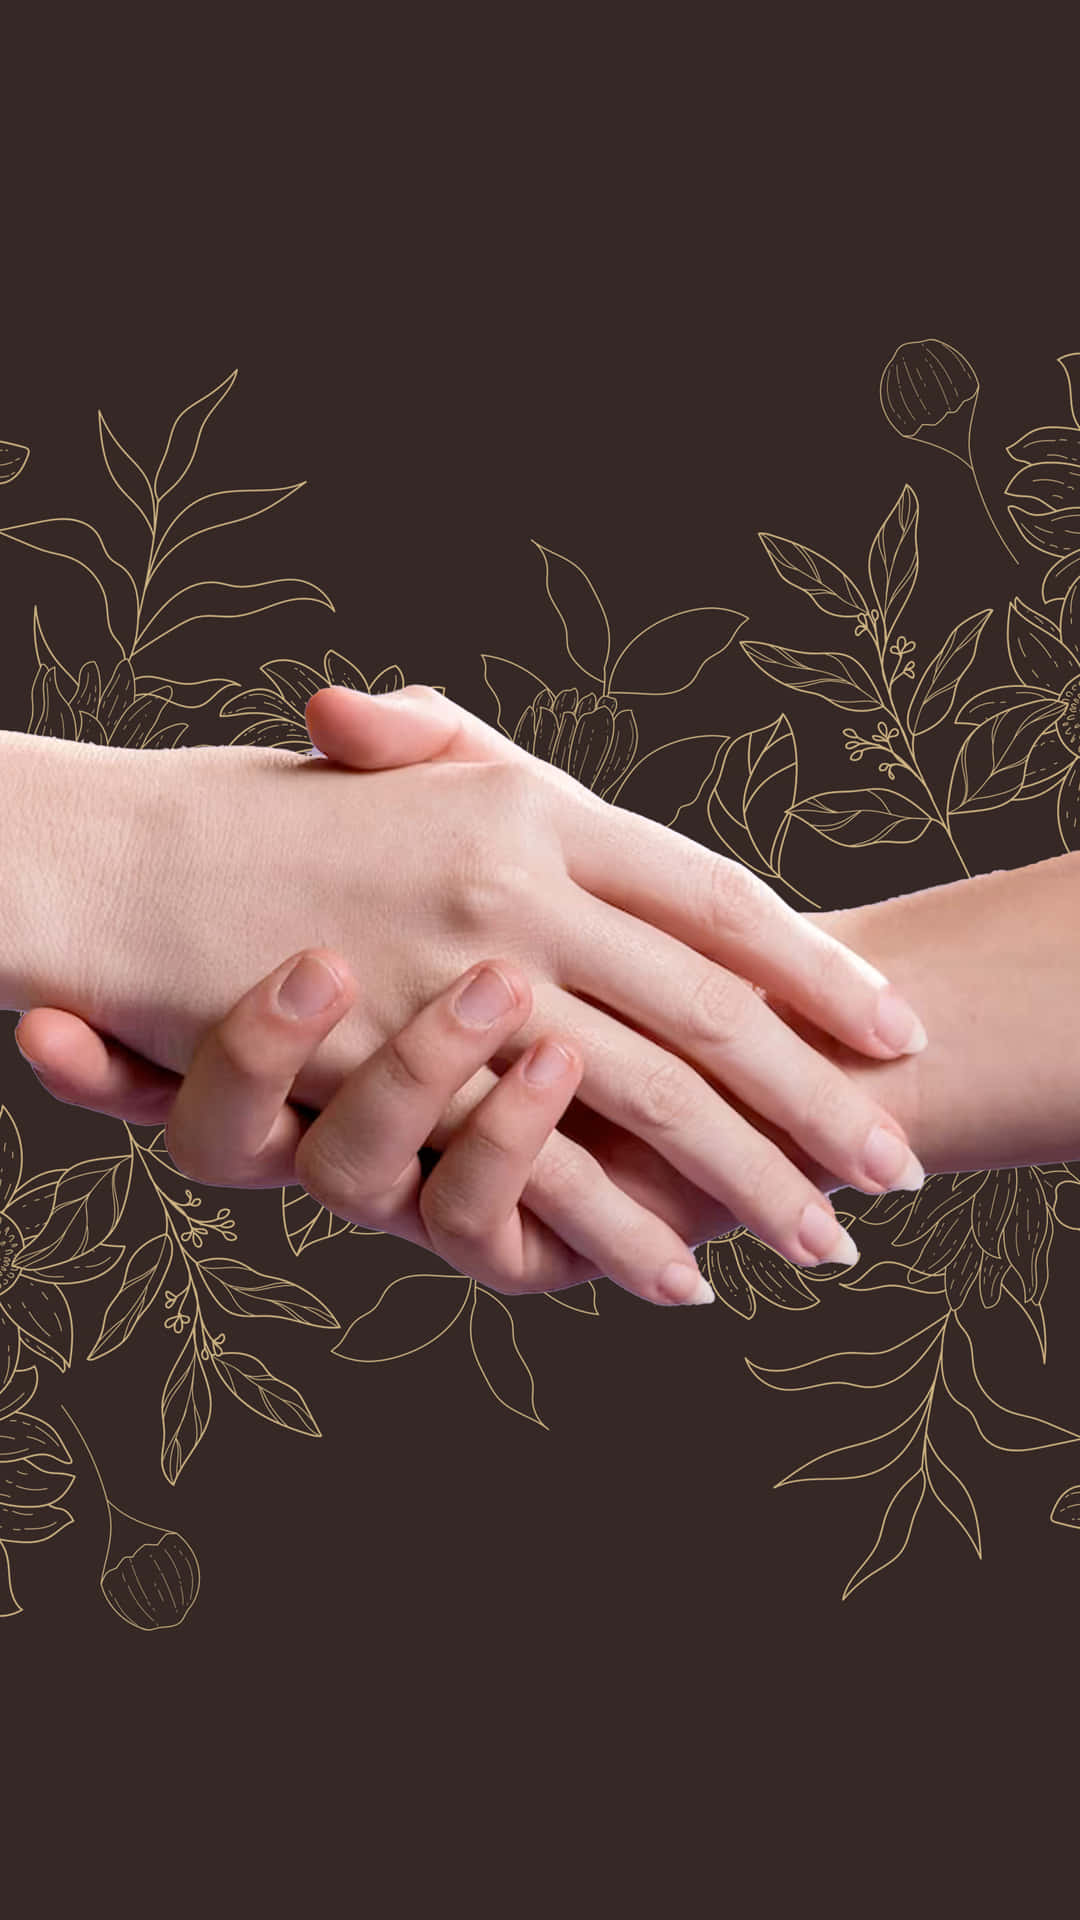 Handshake With Flower Illustrations